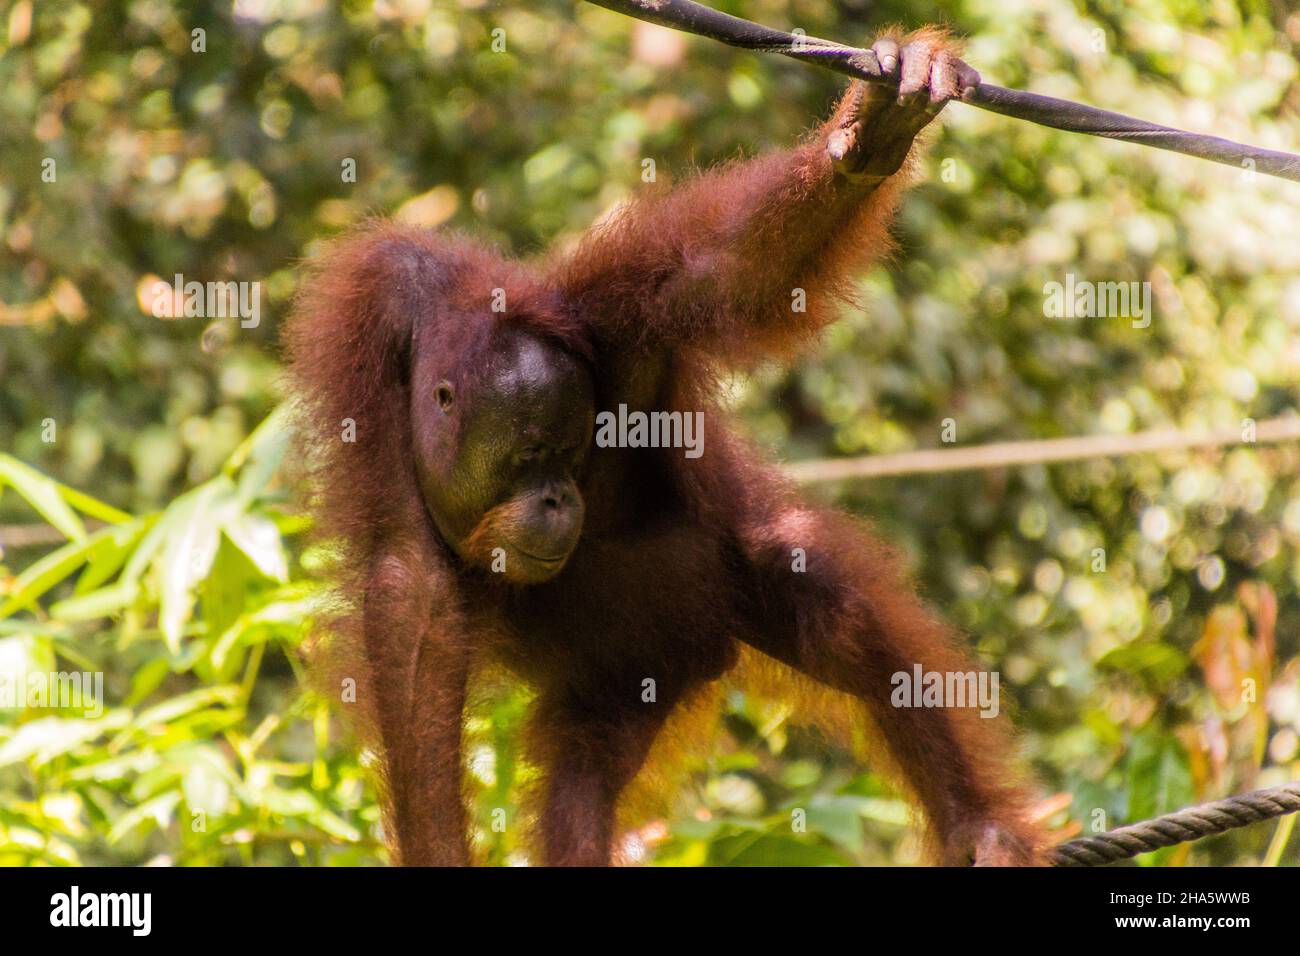 Bornean orangutan Pongo pygmaeus in Sepilok Orangutan Rehabilitation Centre, Borneo island, Malaysia Stock Photo